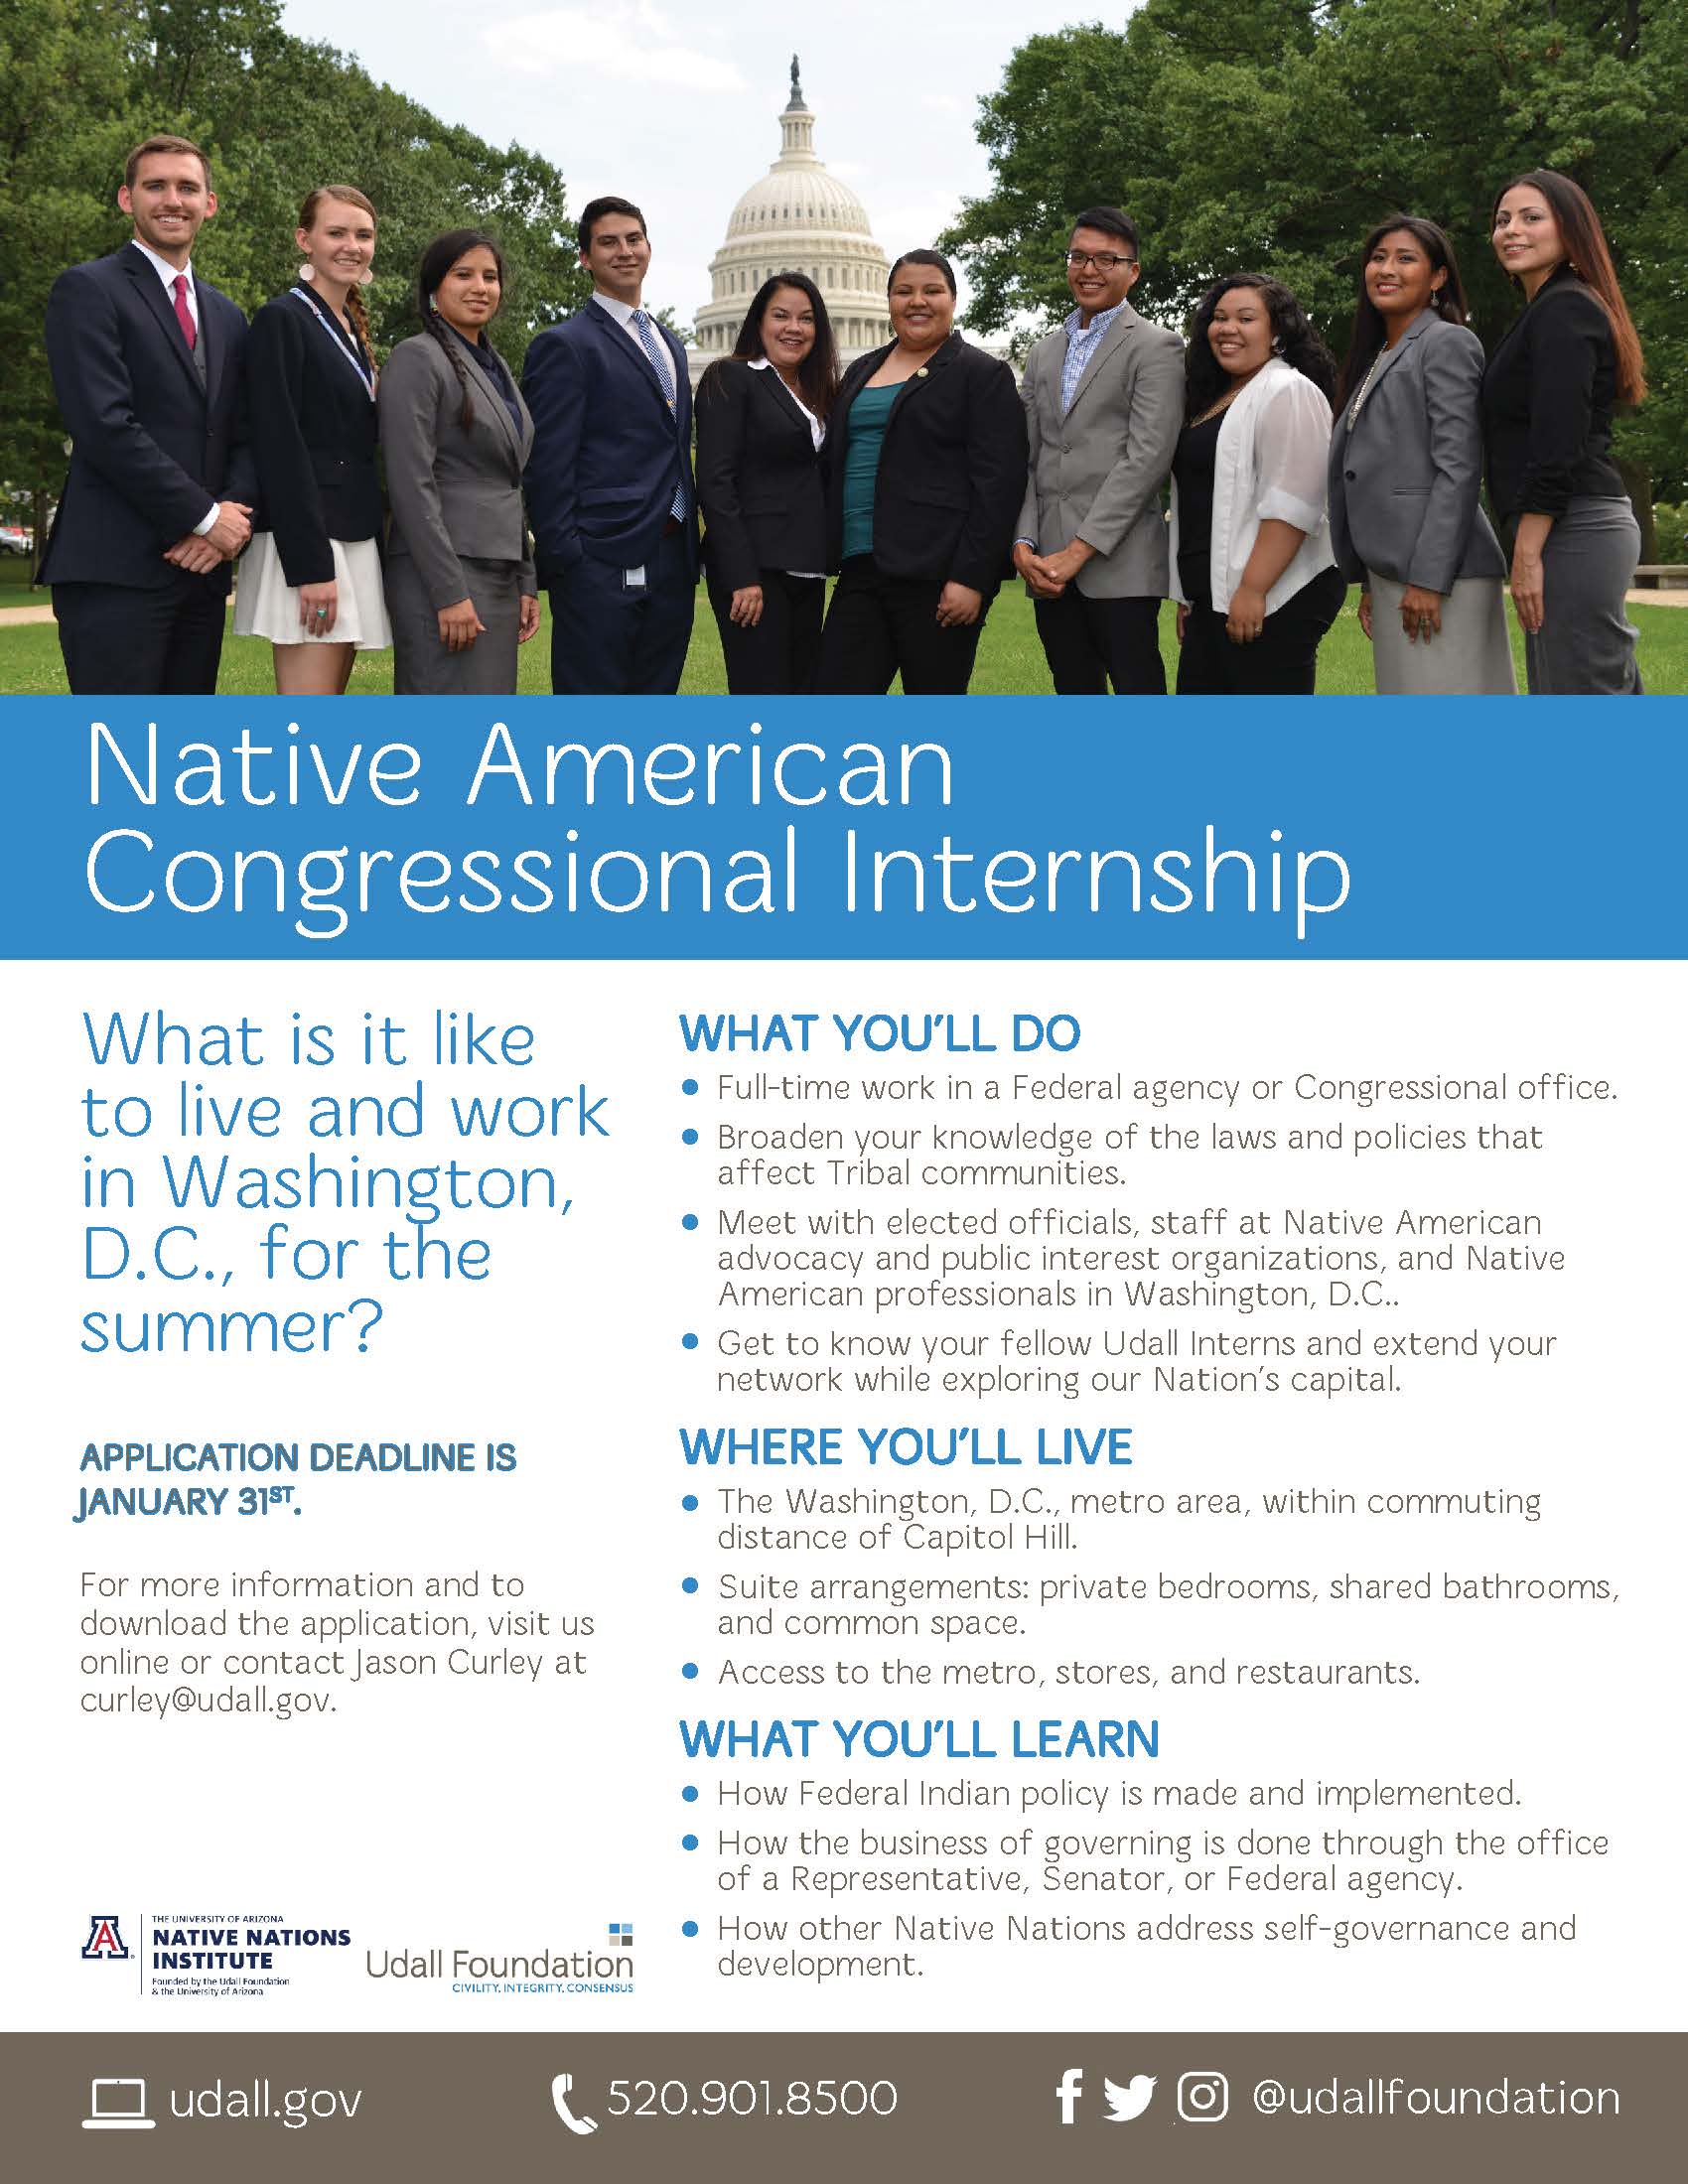 Udall Native American Congressional Internship poster